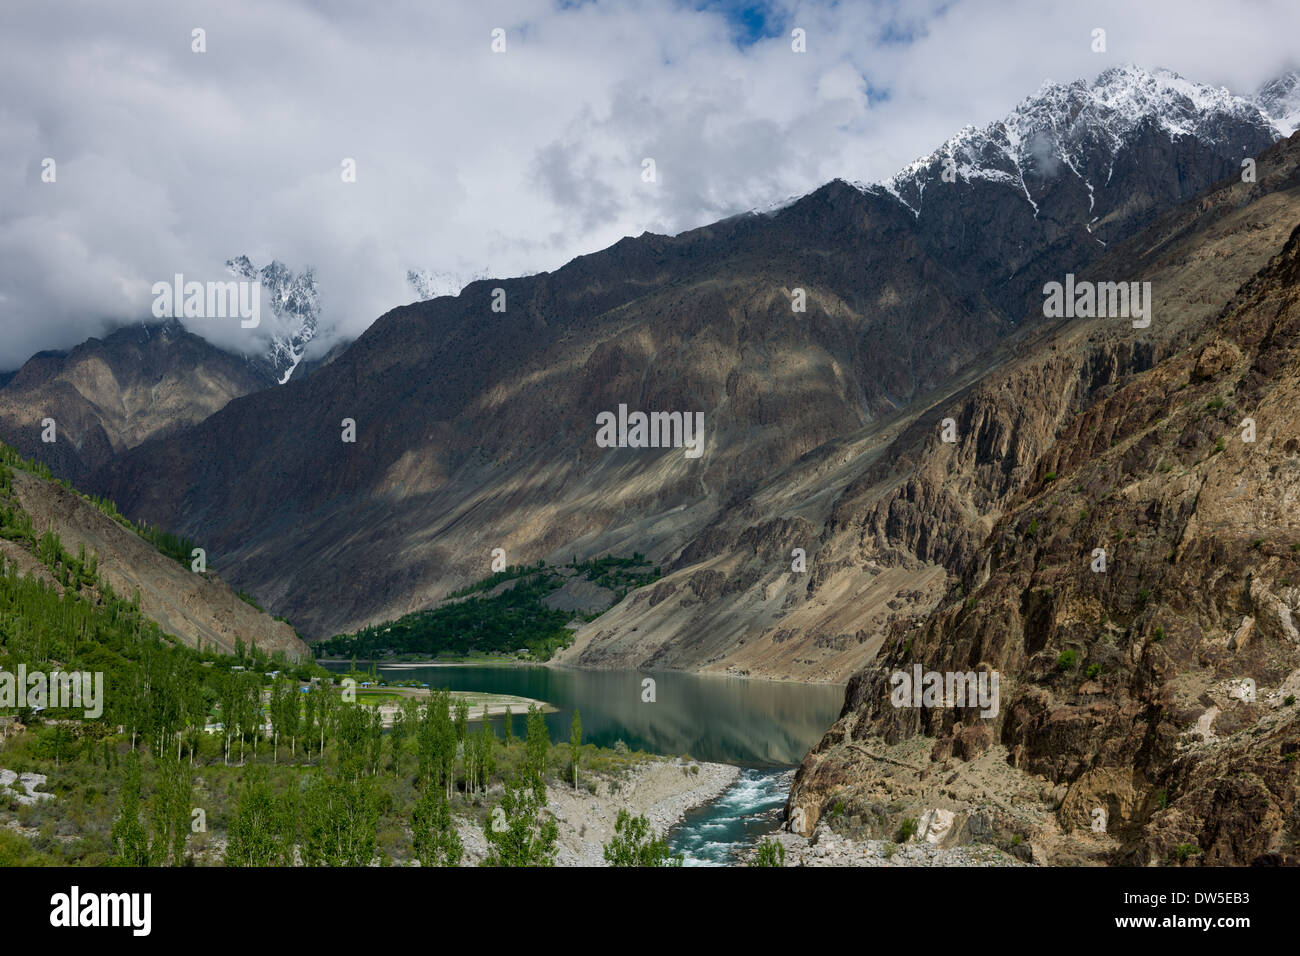 Khalti lago fiancheggiato dai fianchi ripidi del Fiume Ghizar Gilgit (Fiume) Valley, visto dalla strada Shandur-Gilgit, Gilgit-Baltistan, Pakistan Foto Stock